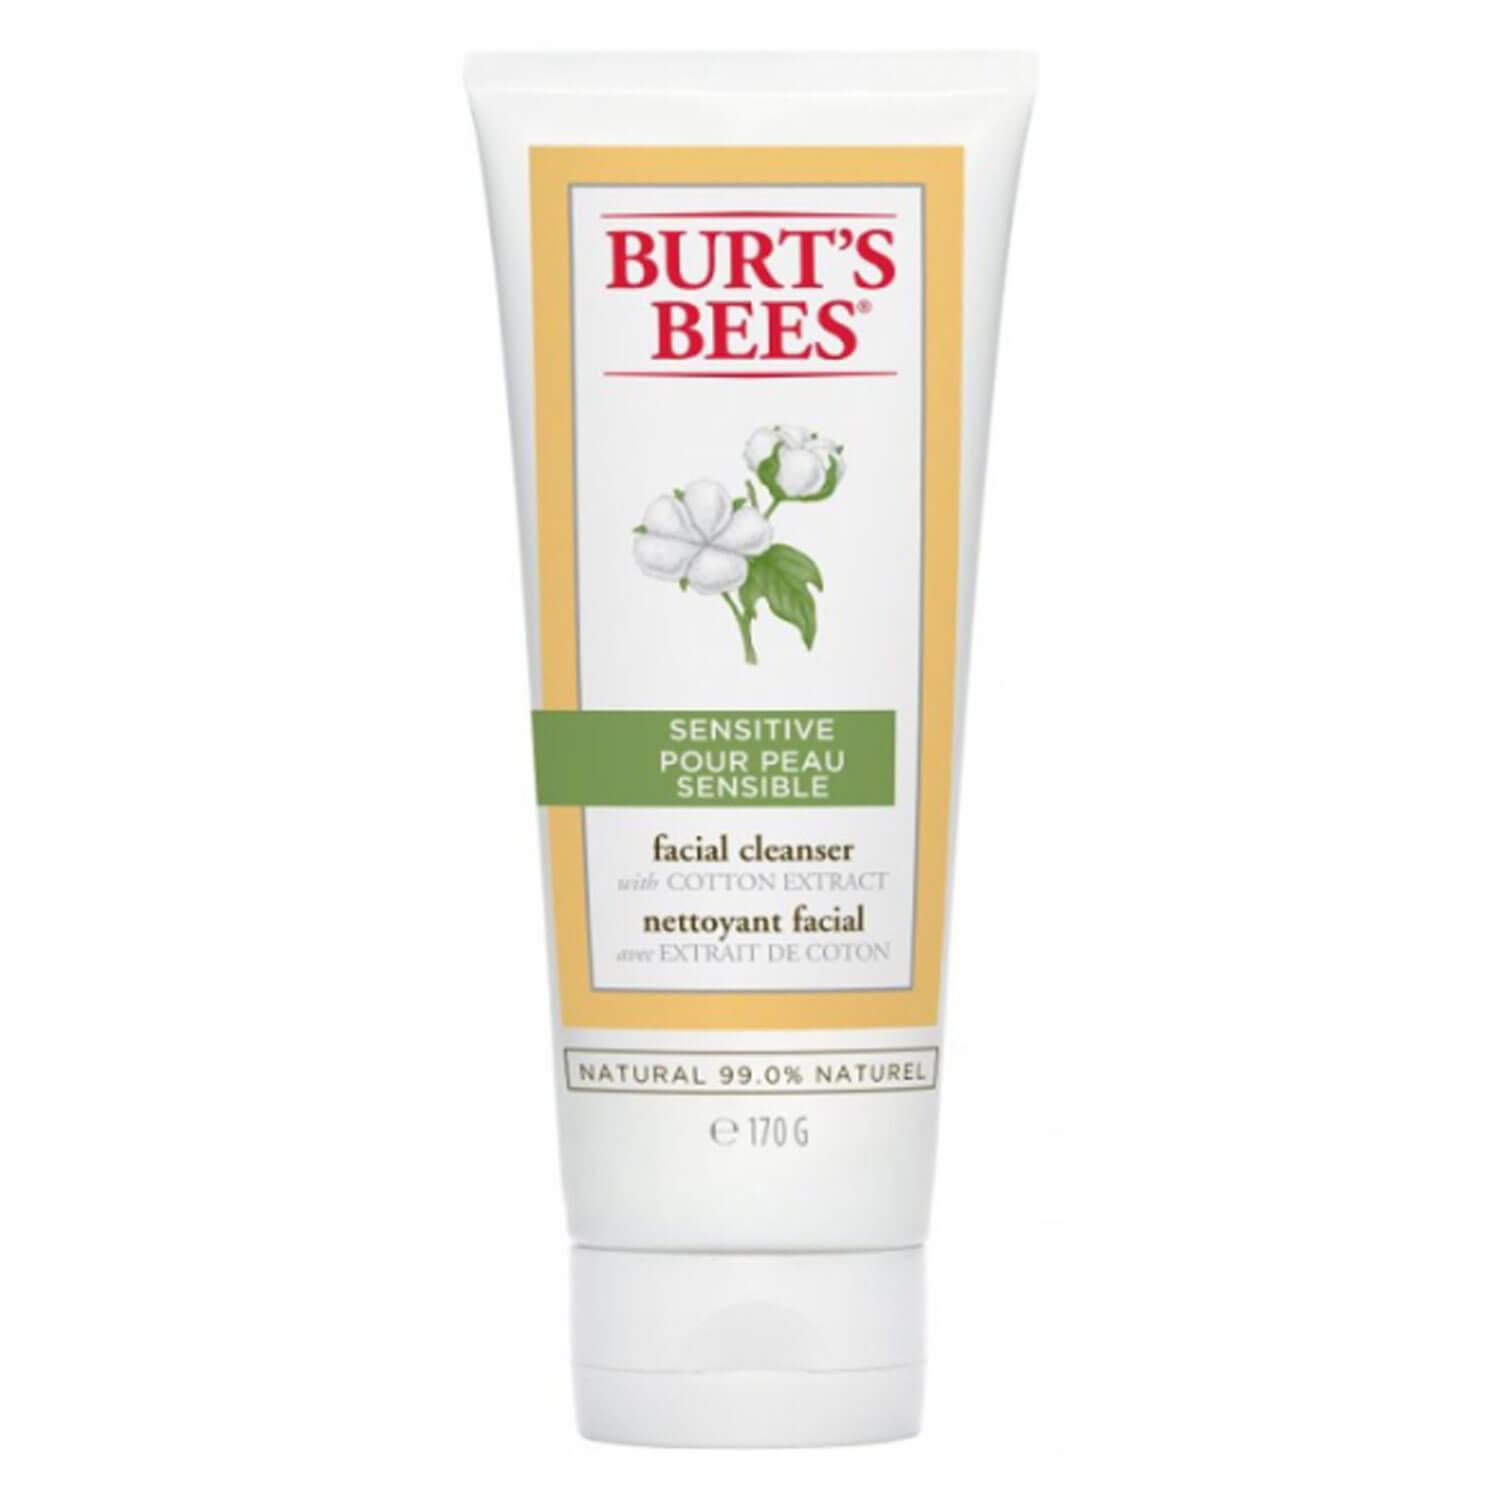 Burt's Bees - Sensitive Facial Cleanser Cotton Extract